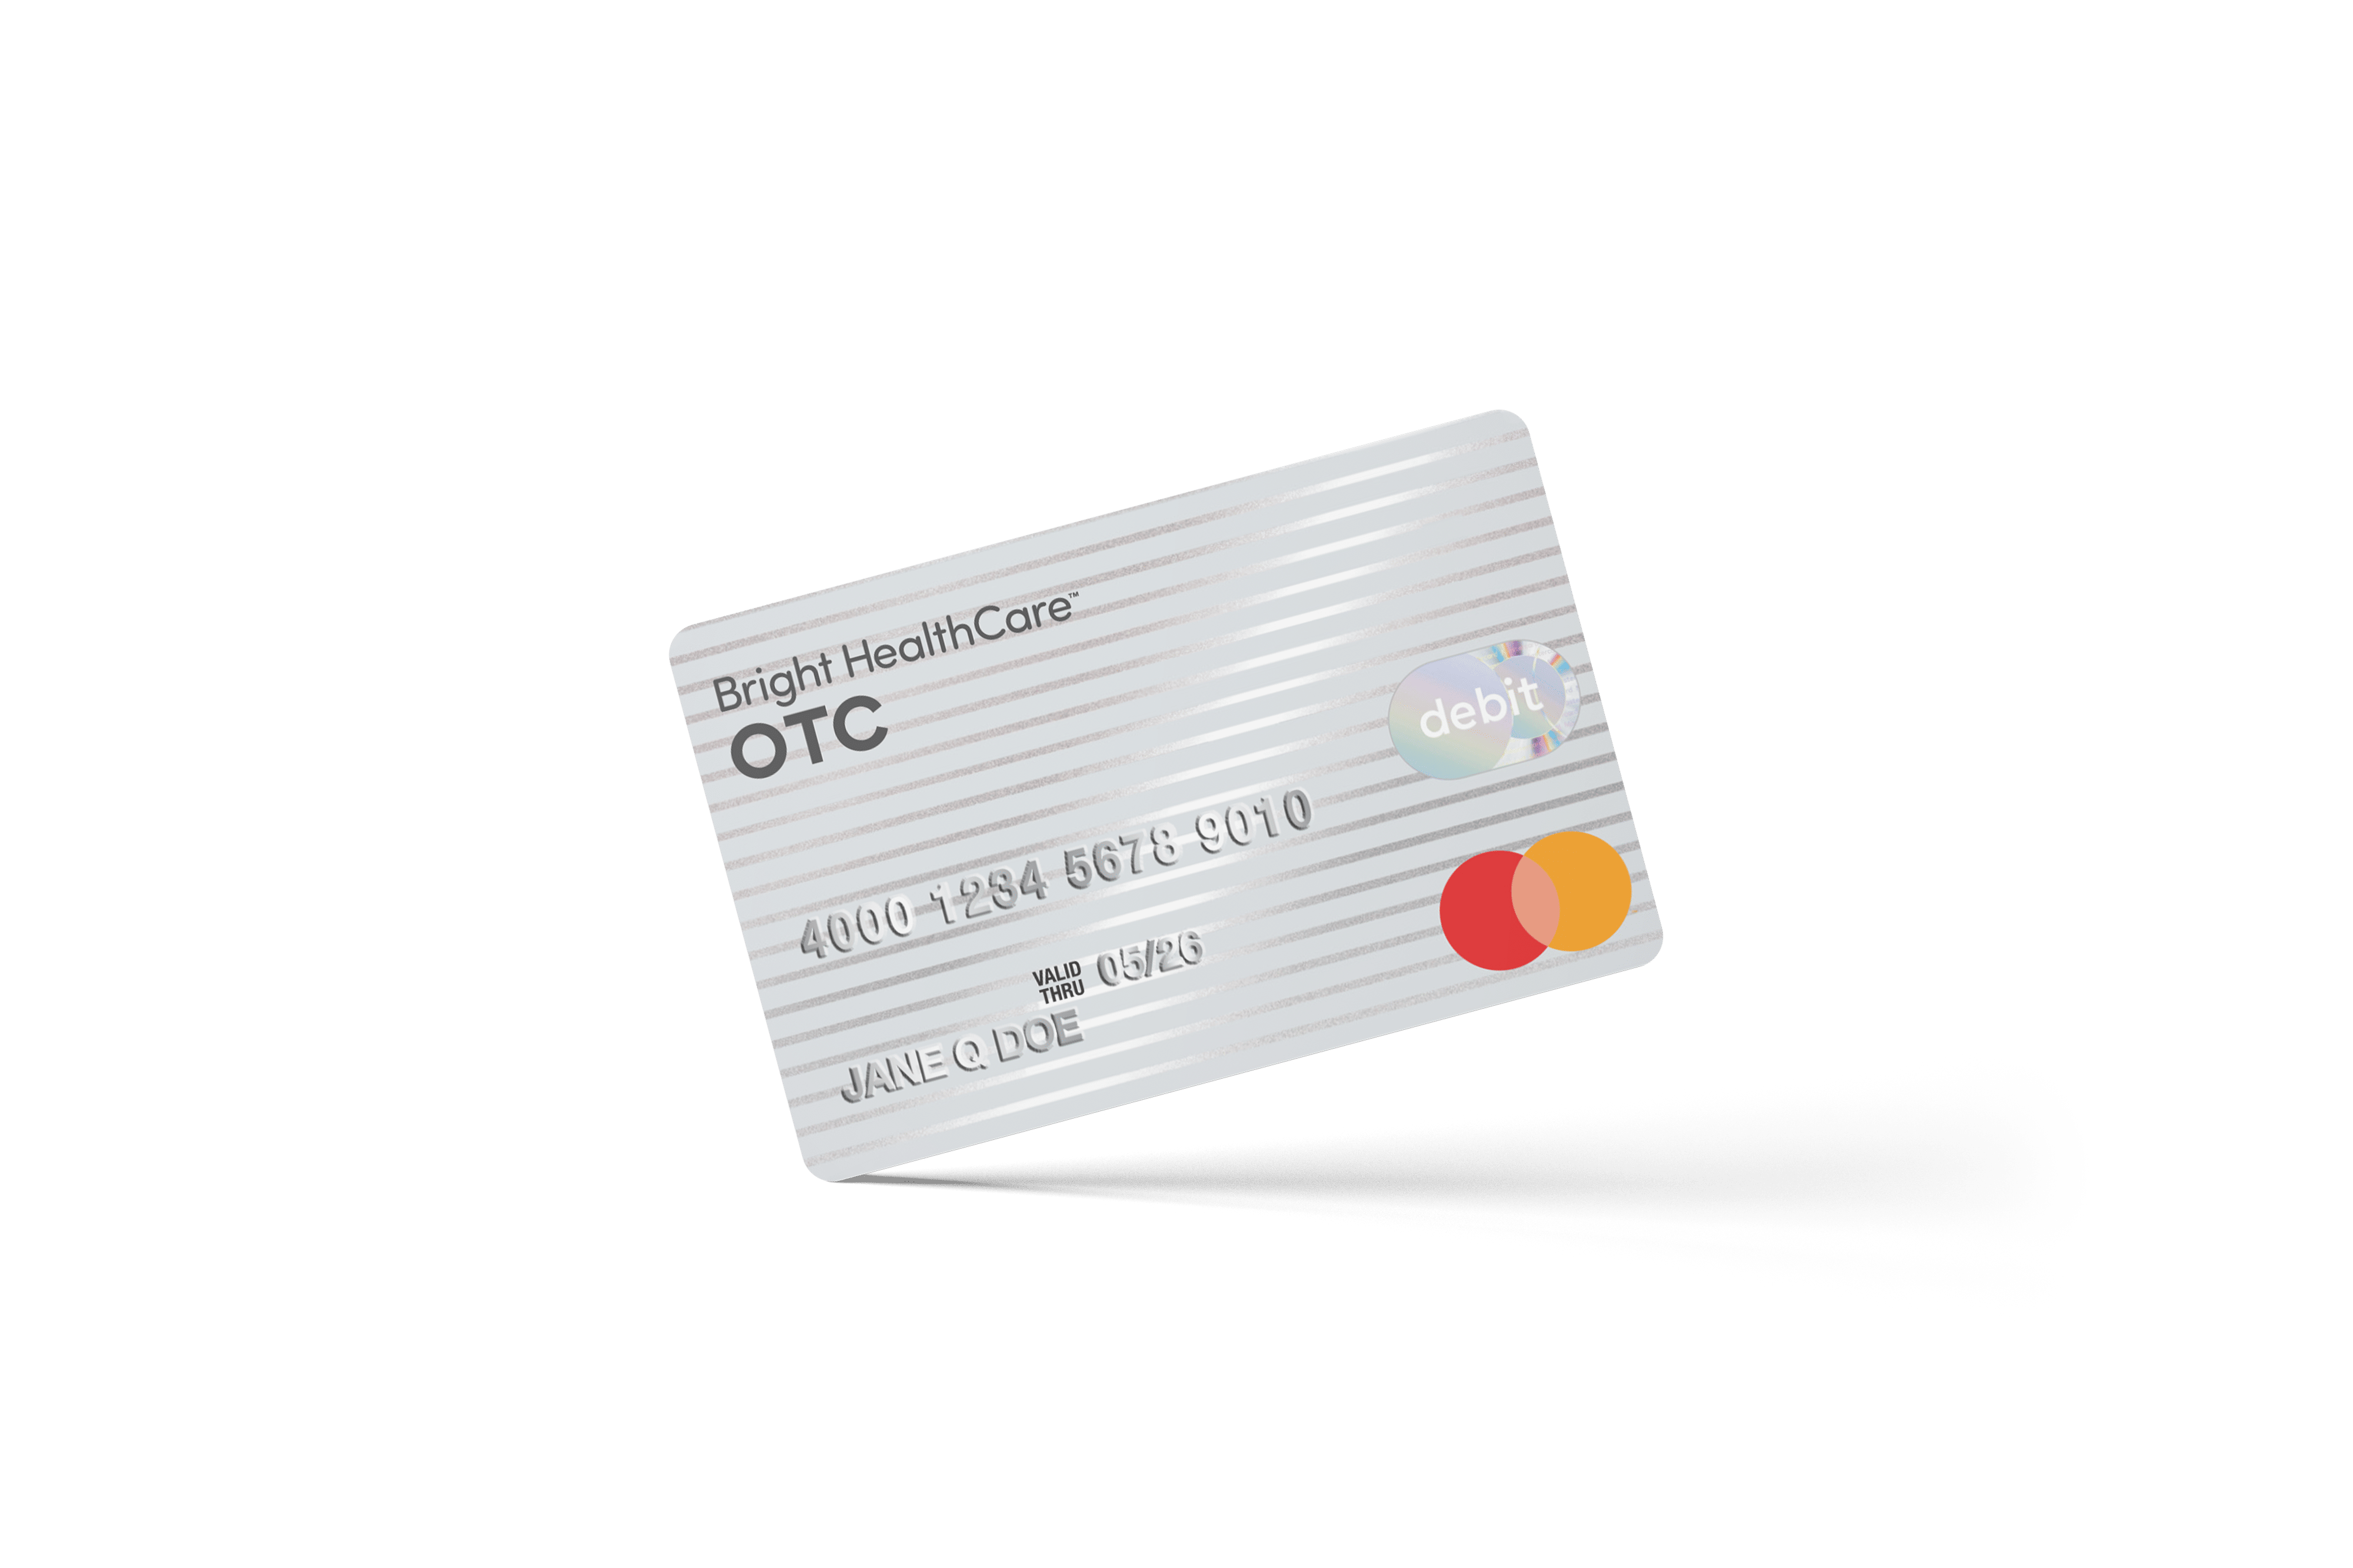 PNG de tarjeta OTC